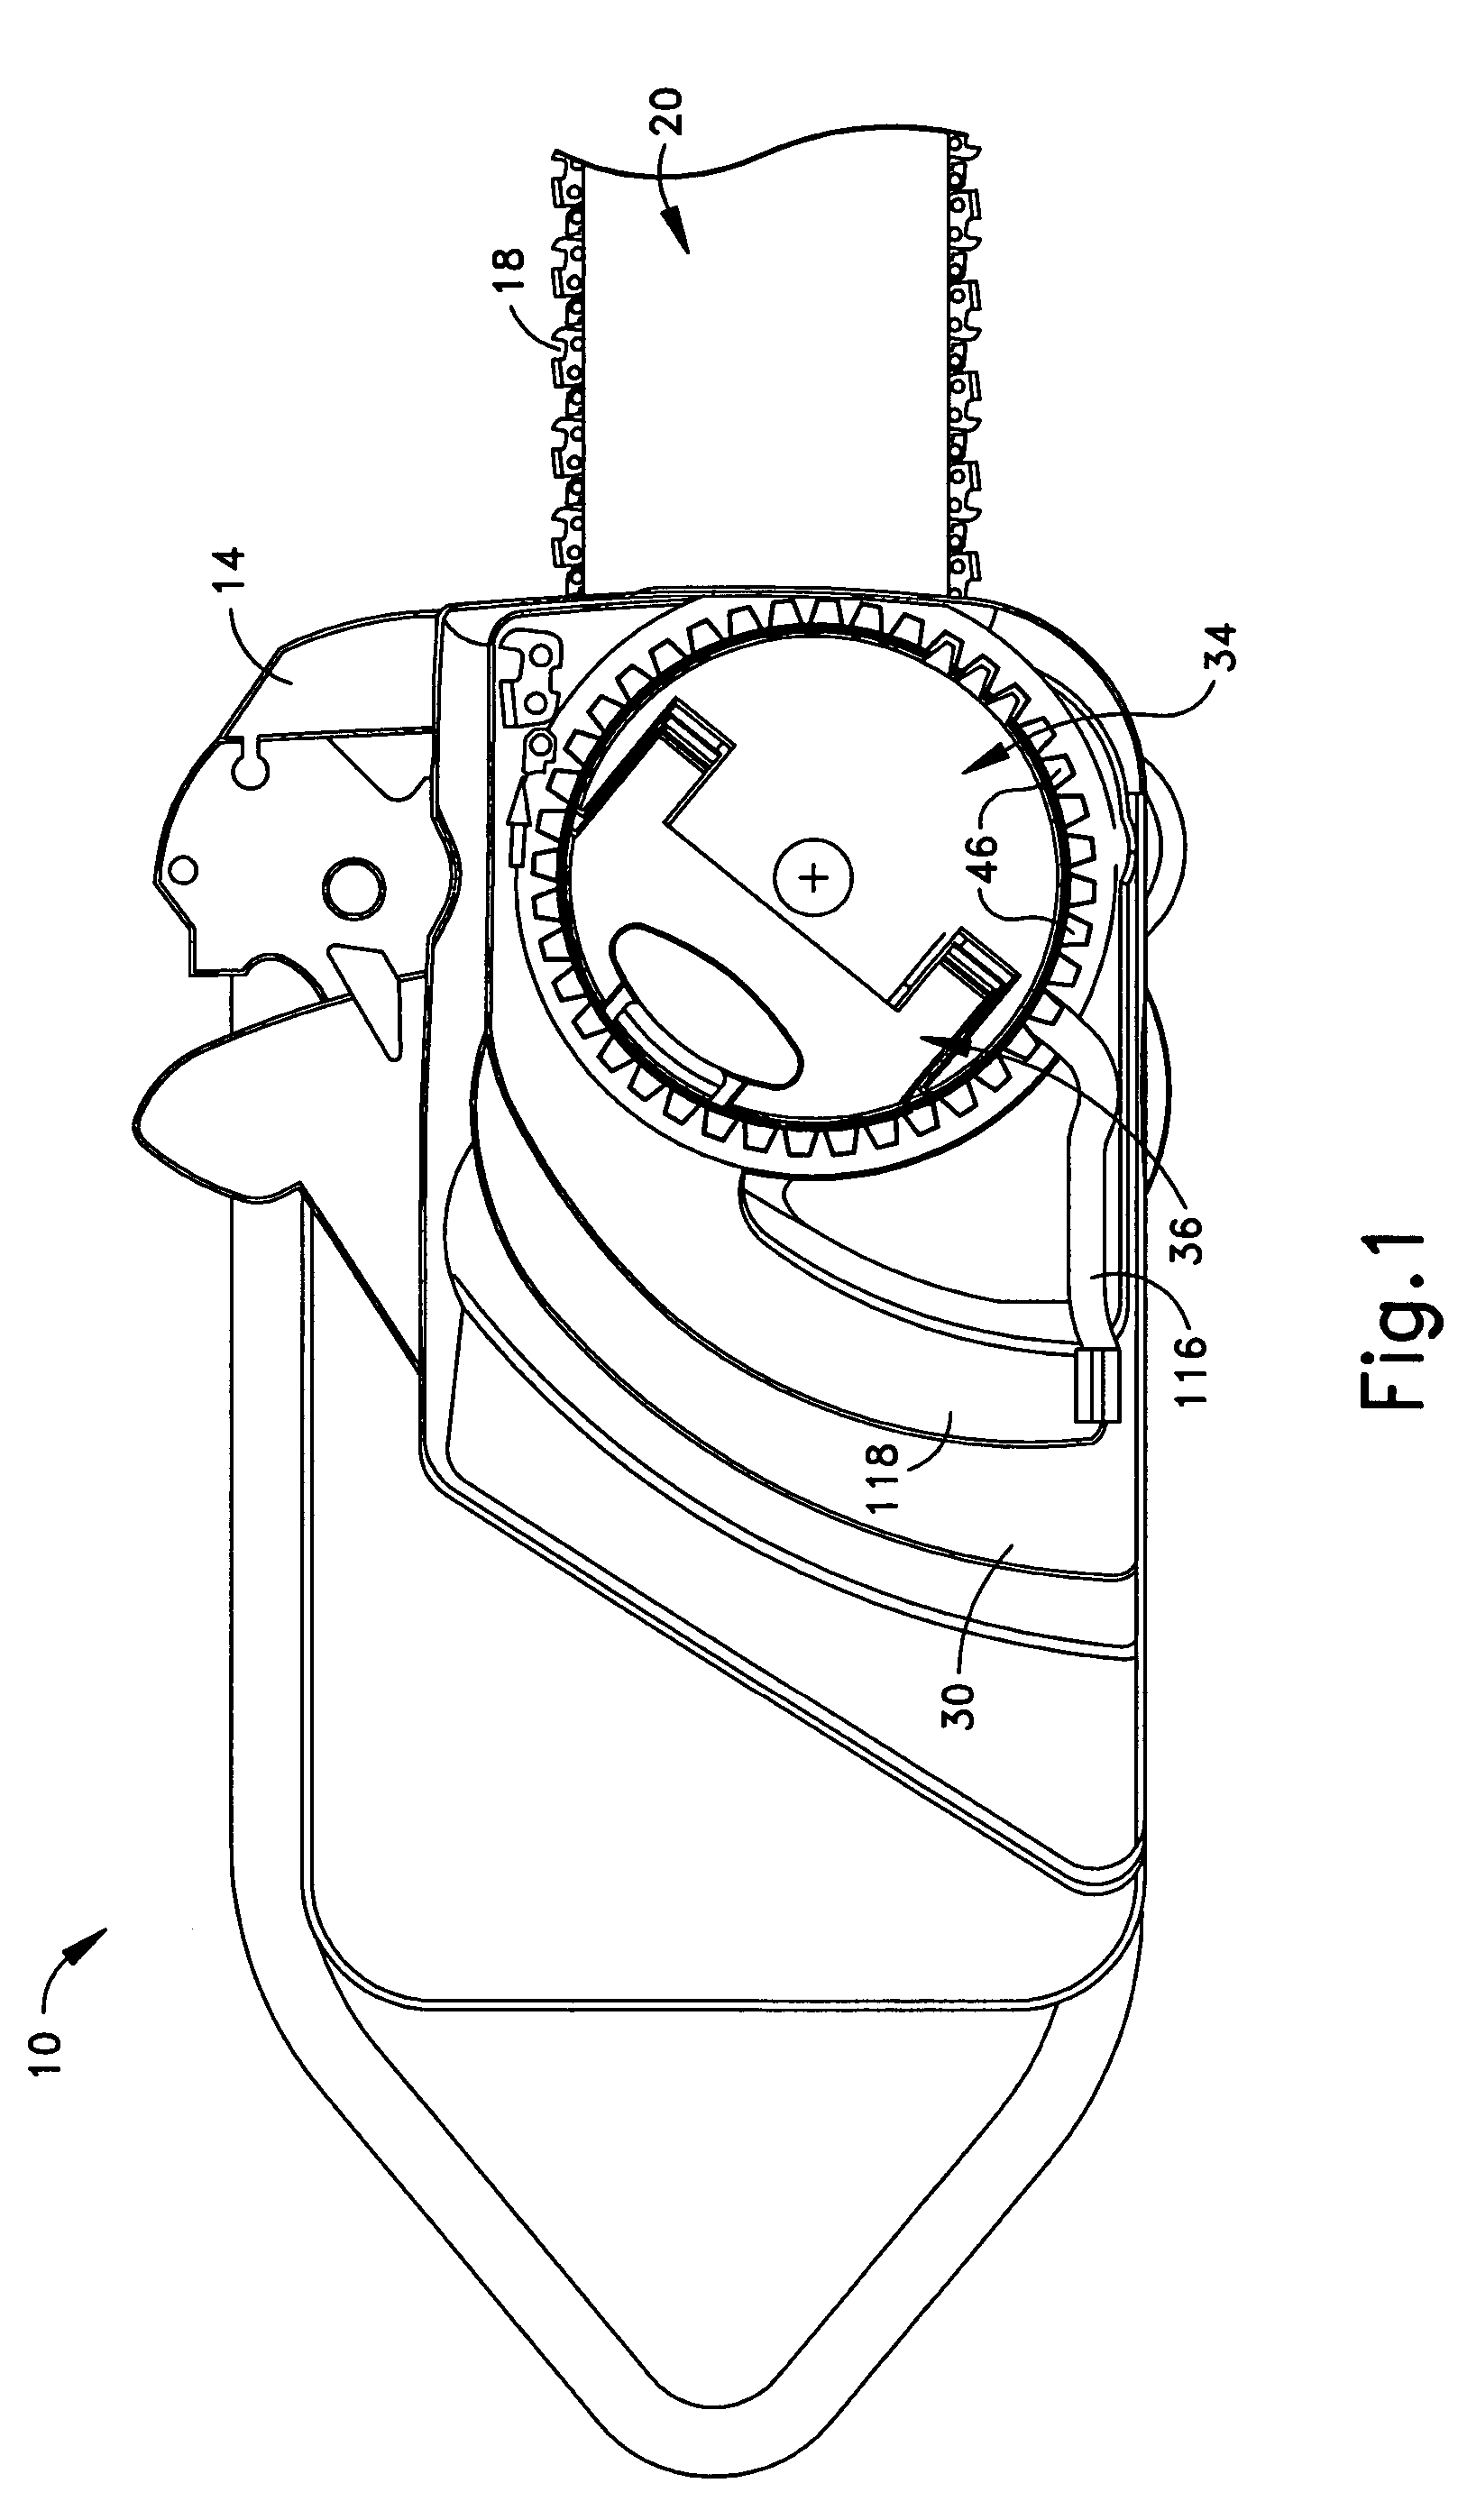 Bar knob with cam-operated locking mechanism